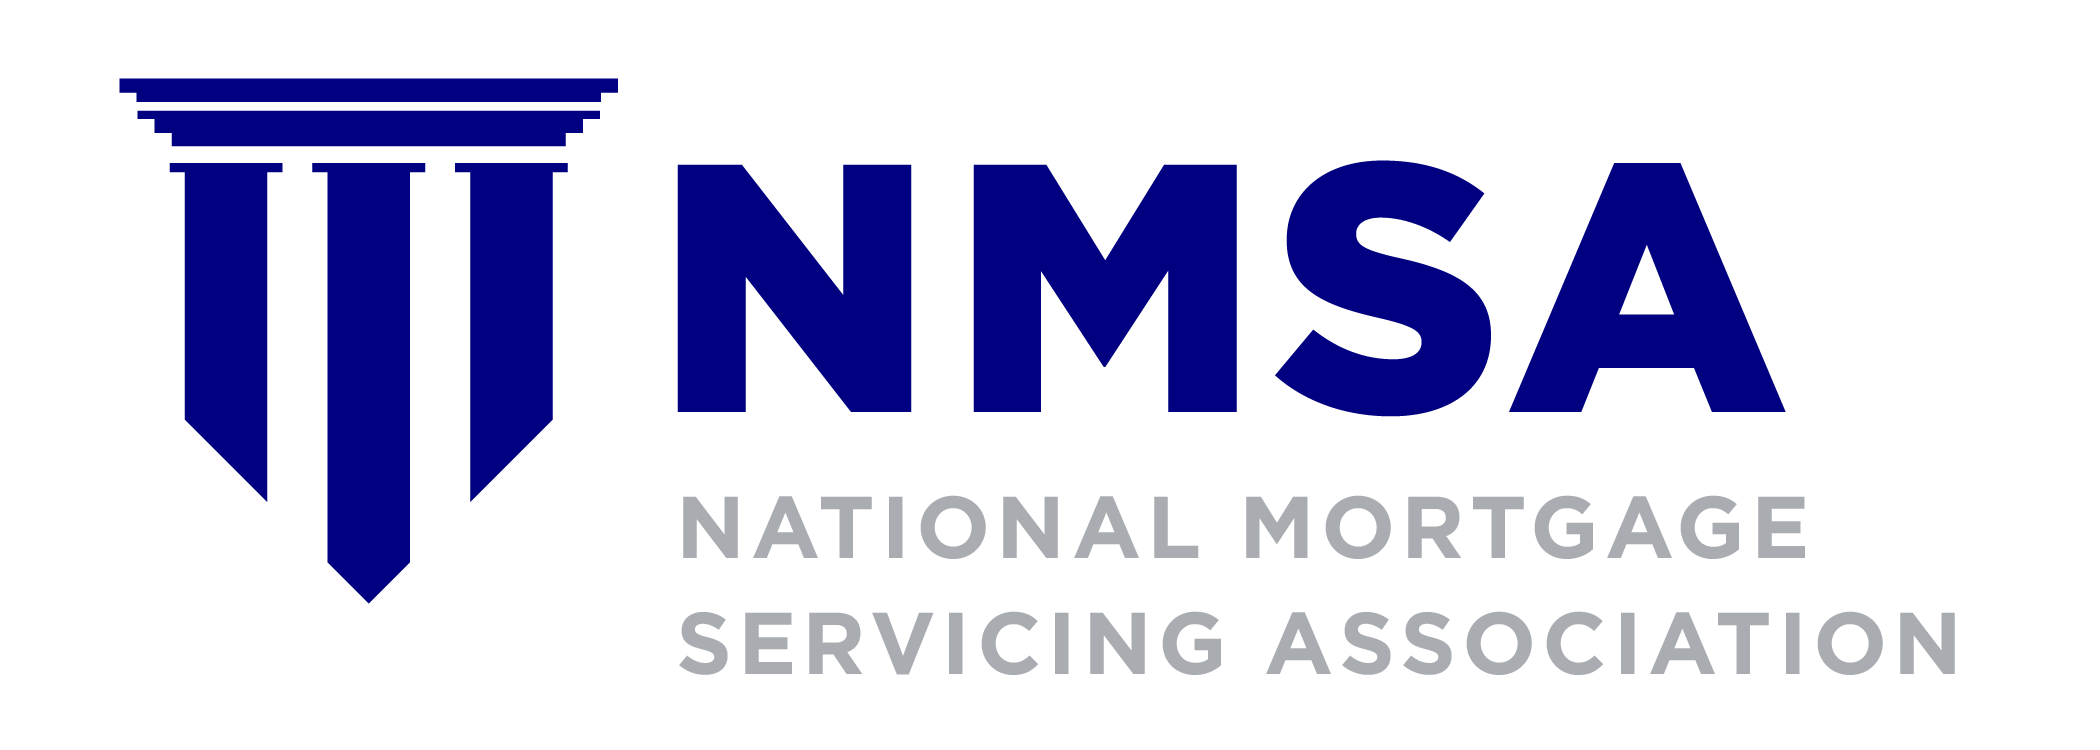 National Mortgage Servicing Association